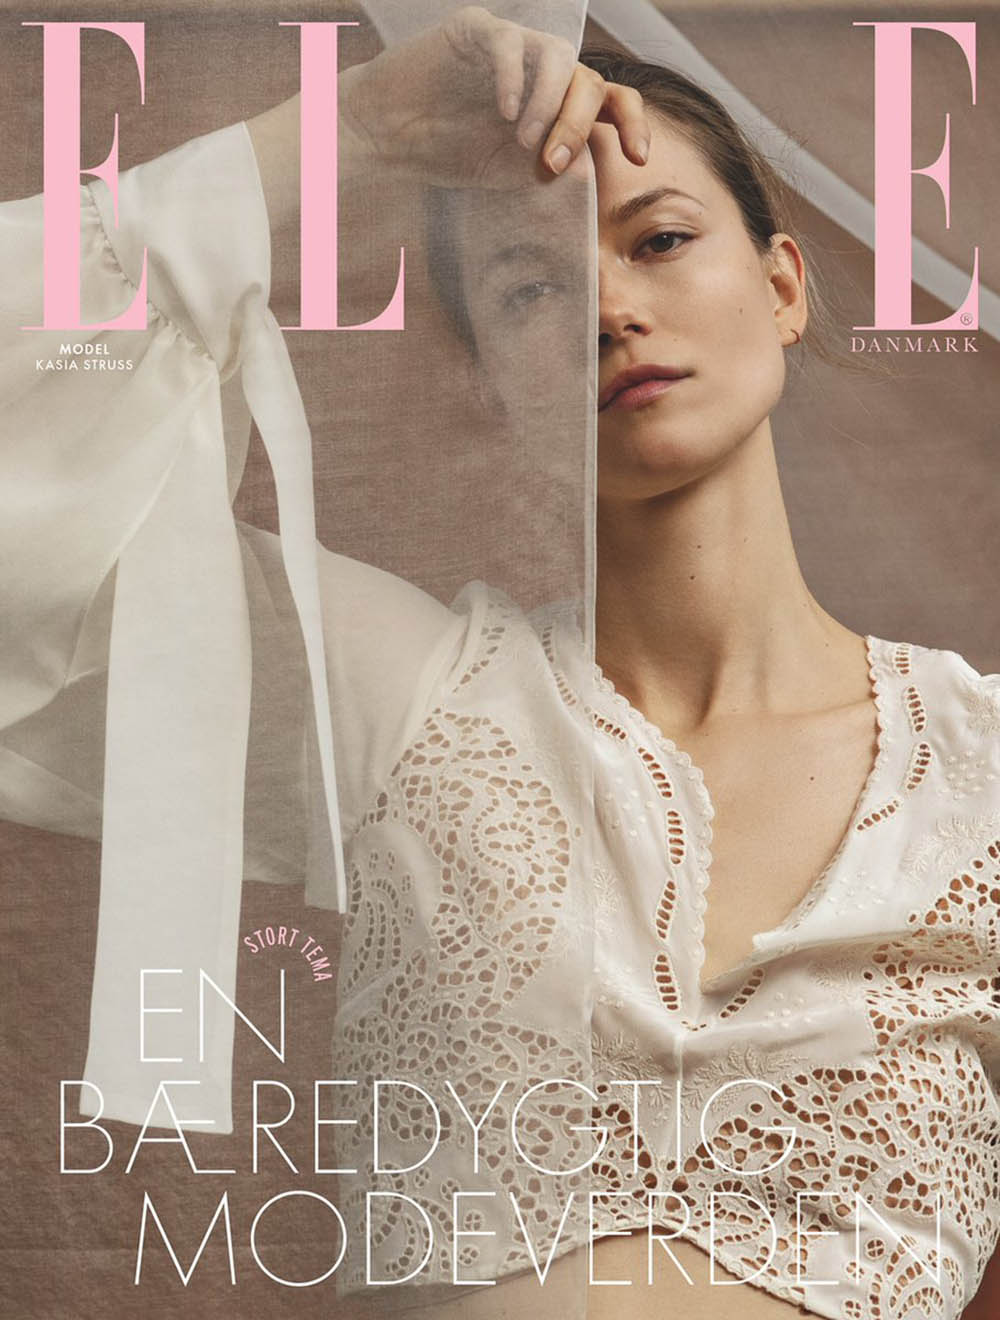 Kasia Struss covers Elle Denmark April 2019 by Marco van Rijt